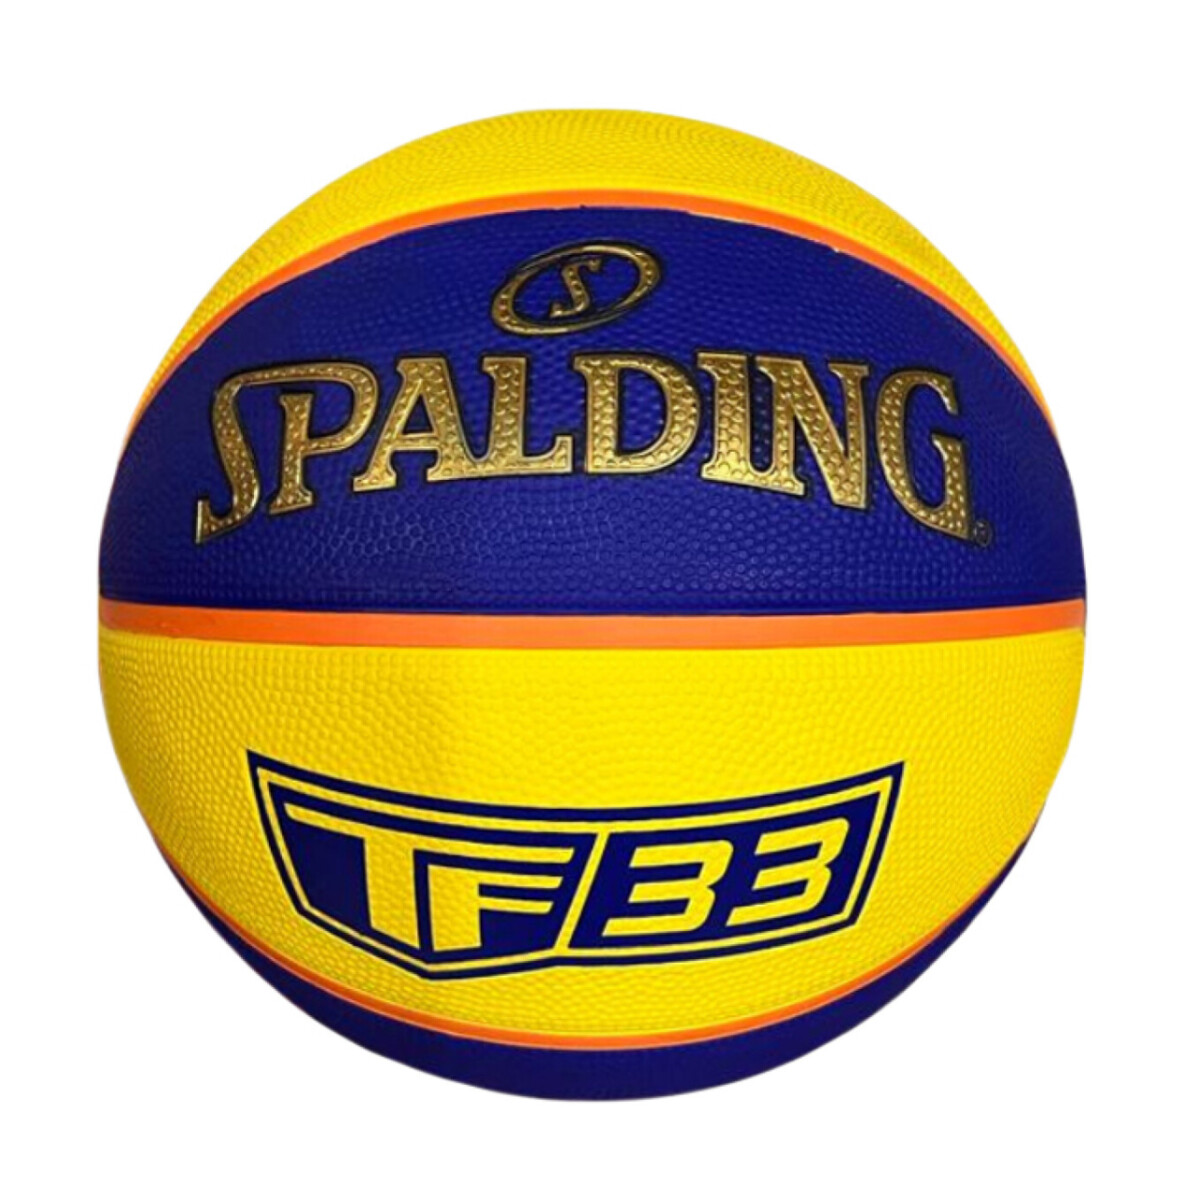 Pelota Basket Spalding Profesional - TF33 Goma Nº6 